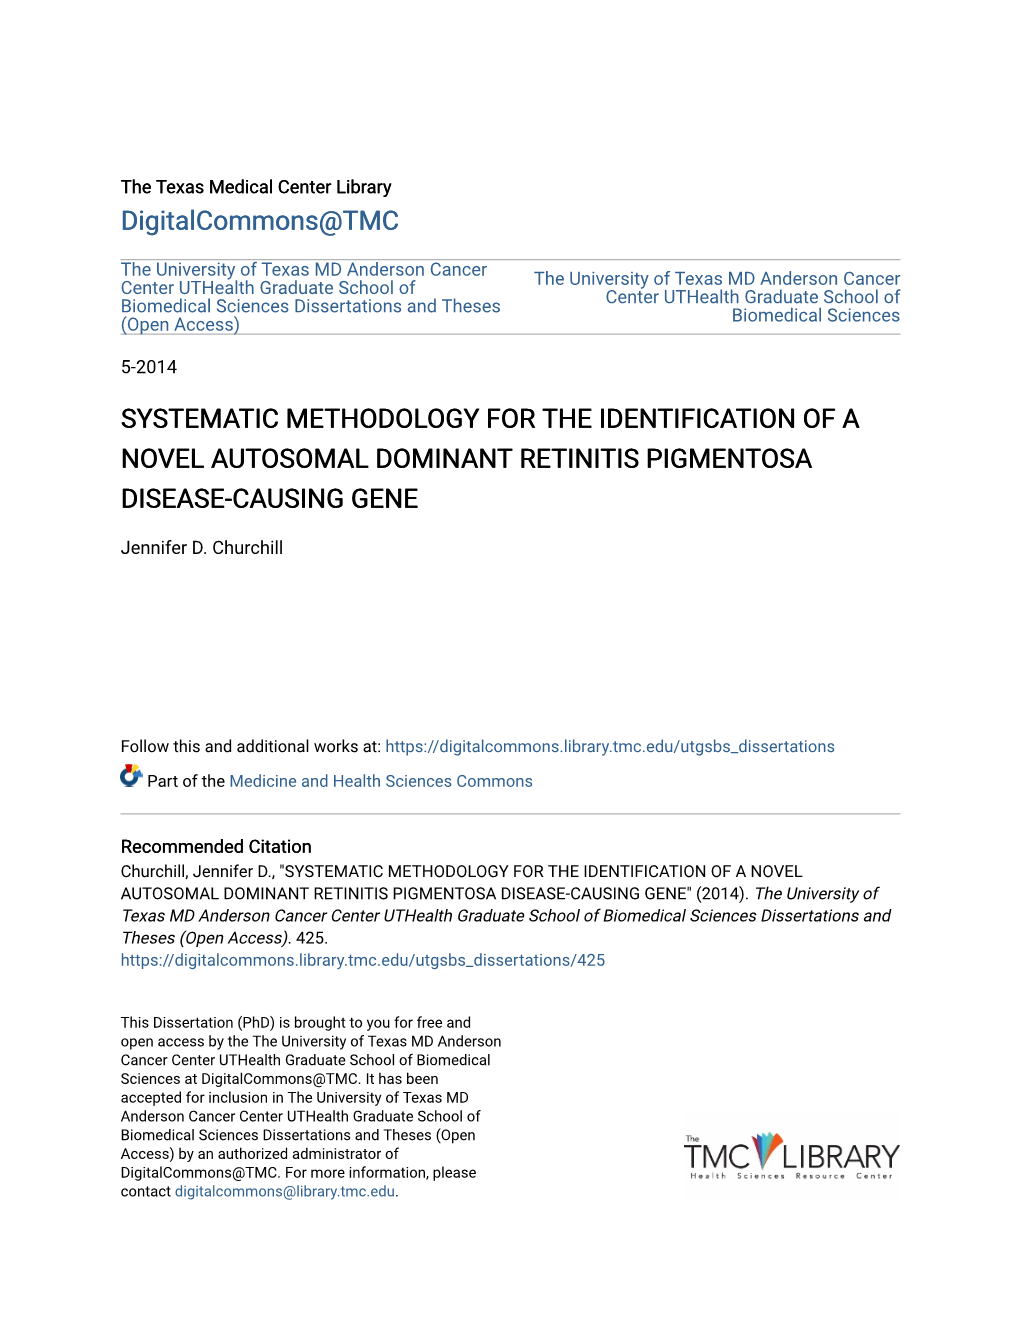 Systematic Methodology for the Identification of a Novel Autosomal Dominant Retinitis Pigmentosa Disease-Causing Gene